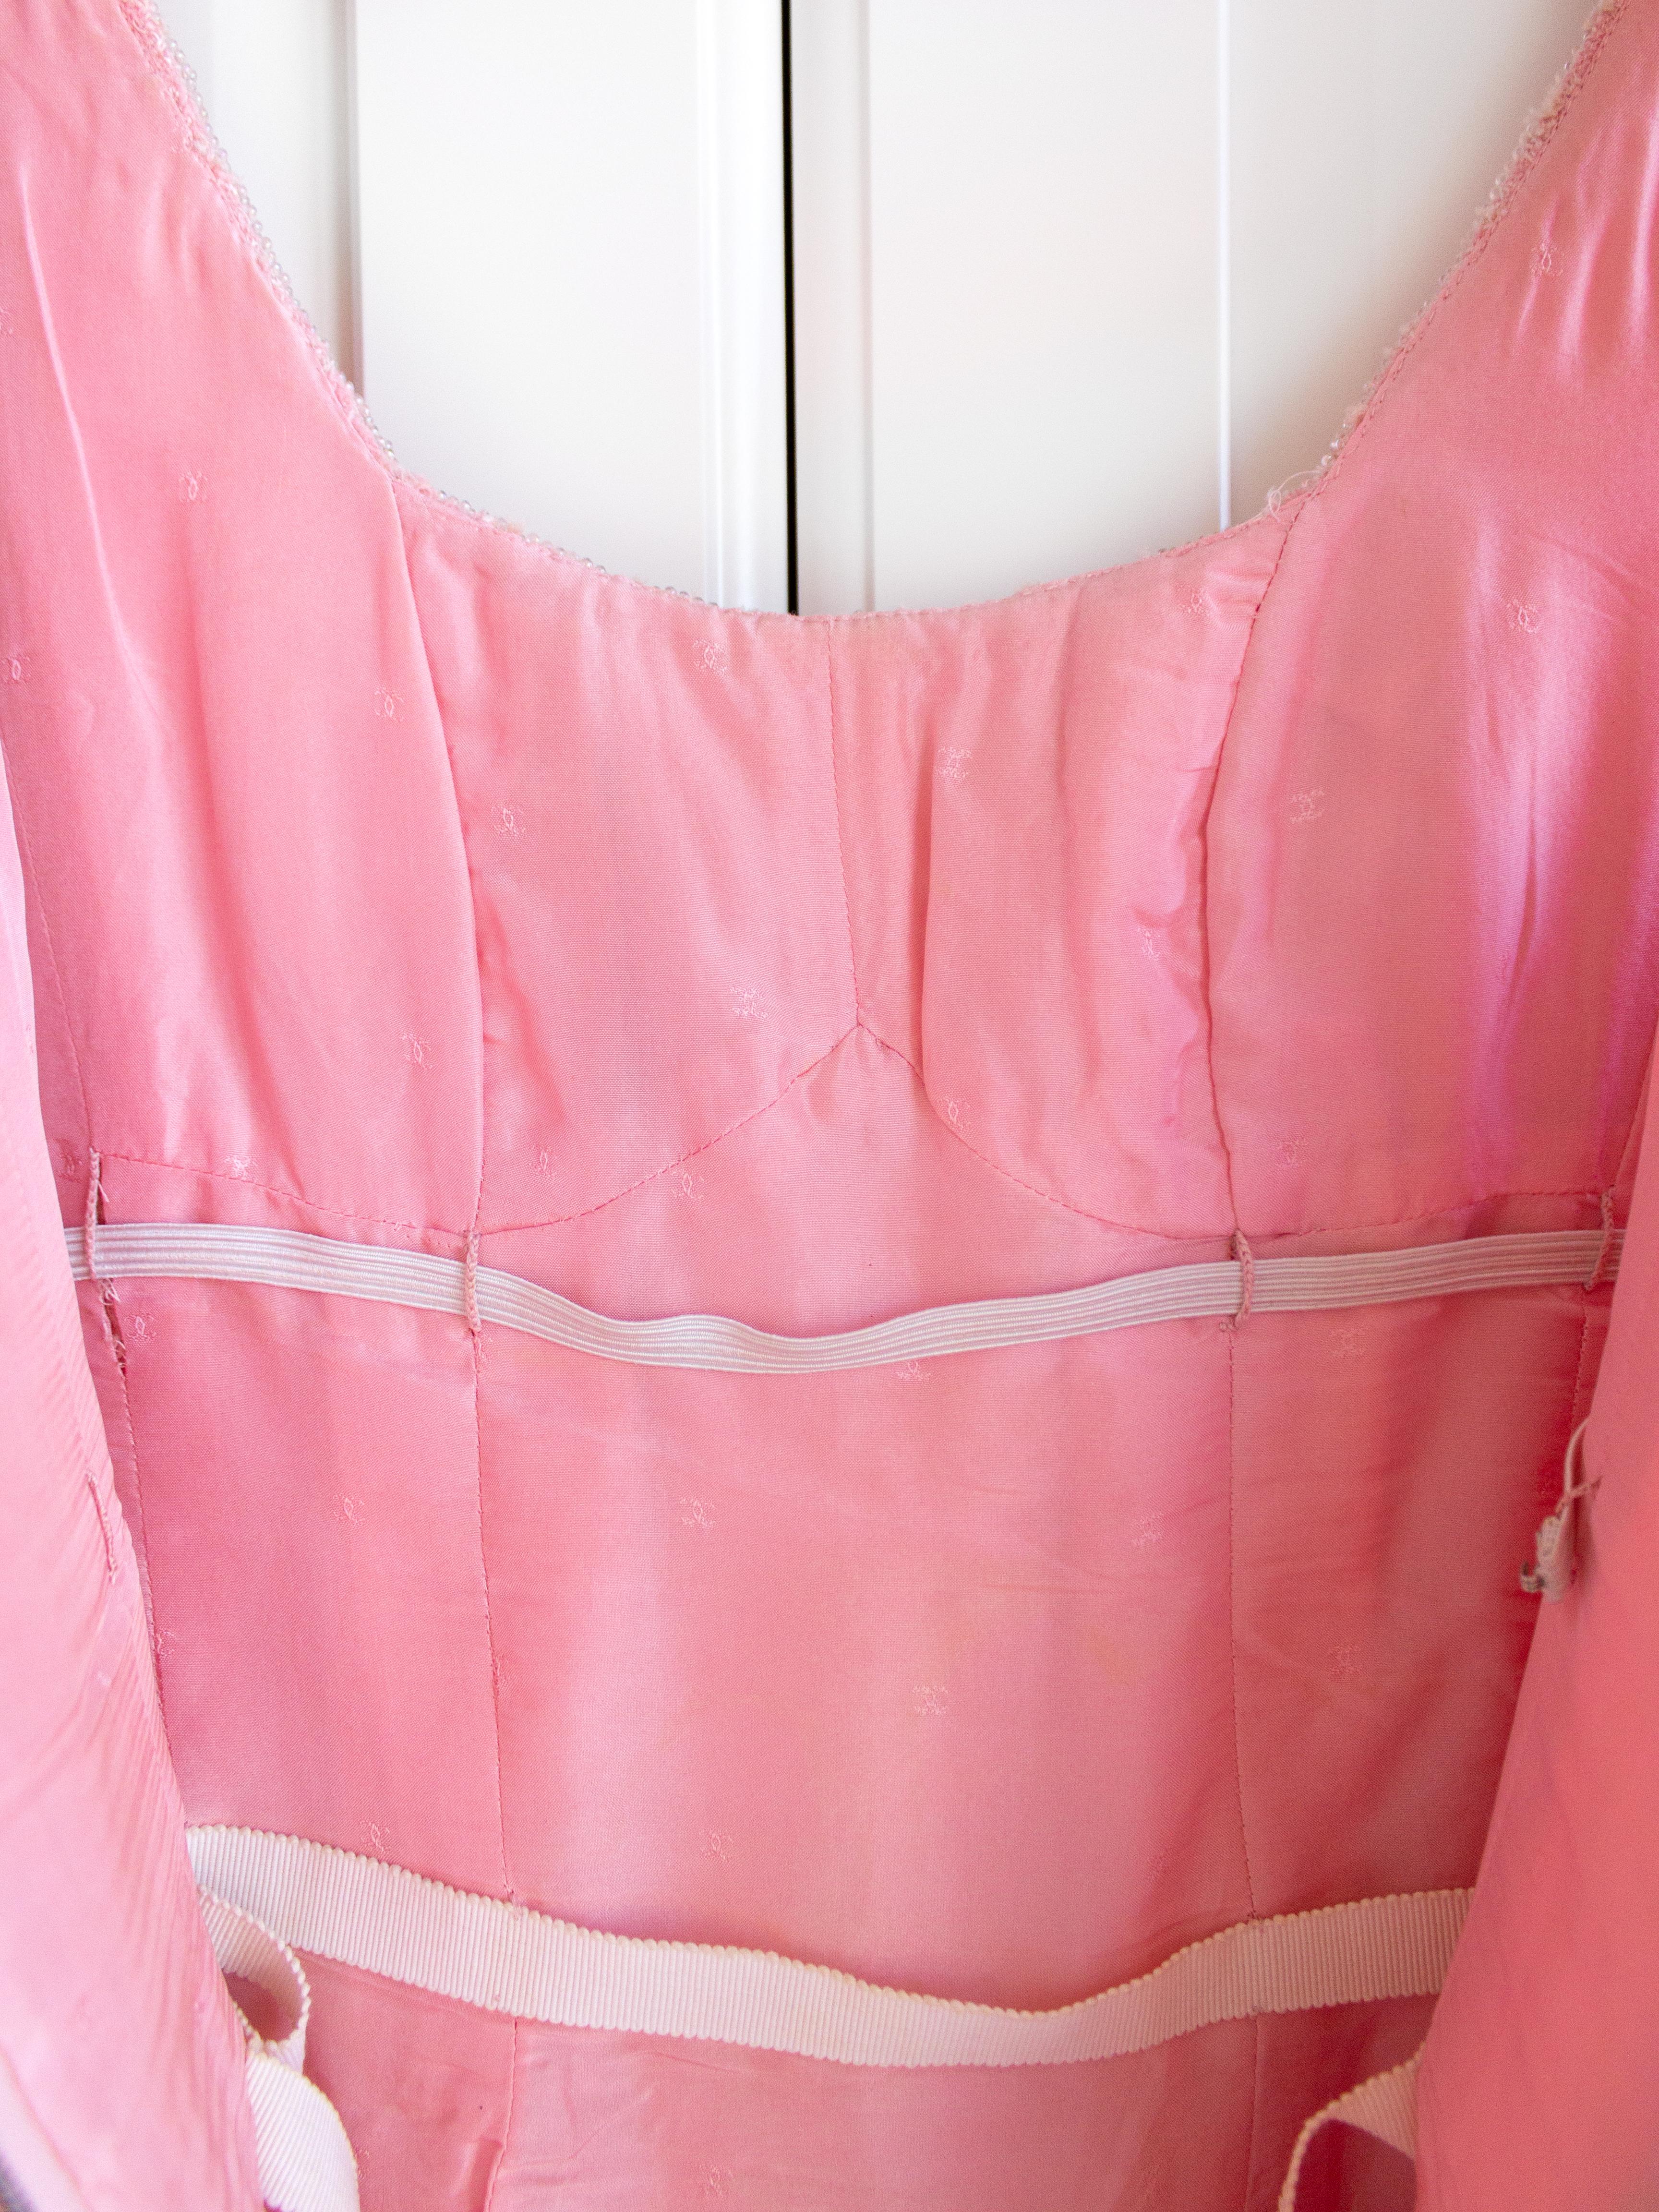 Iconic Chanel Vintage Spring 1994 Pink Tweed Corset Dress Skirt 94P Suit Set 3